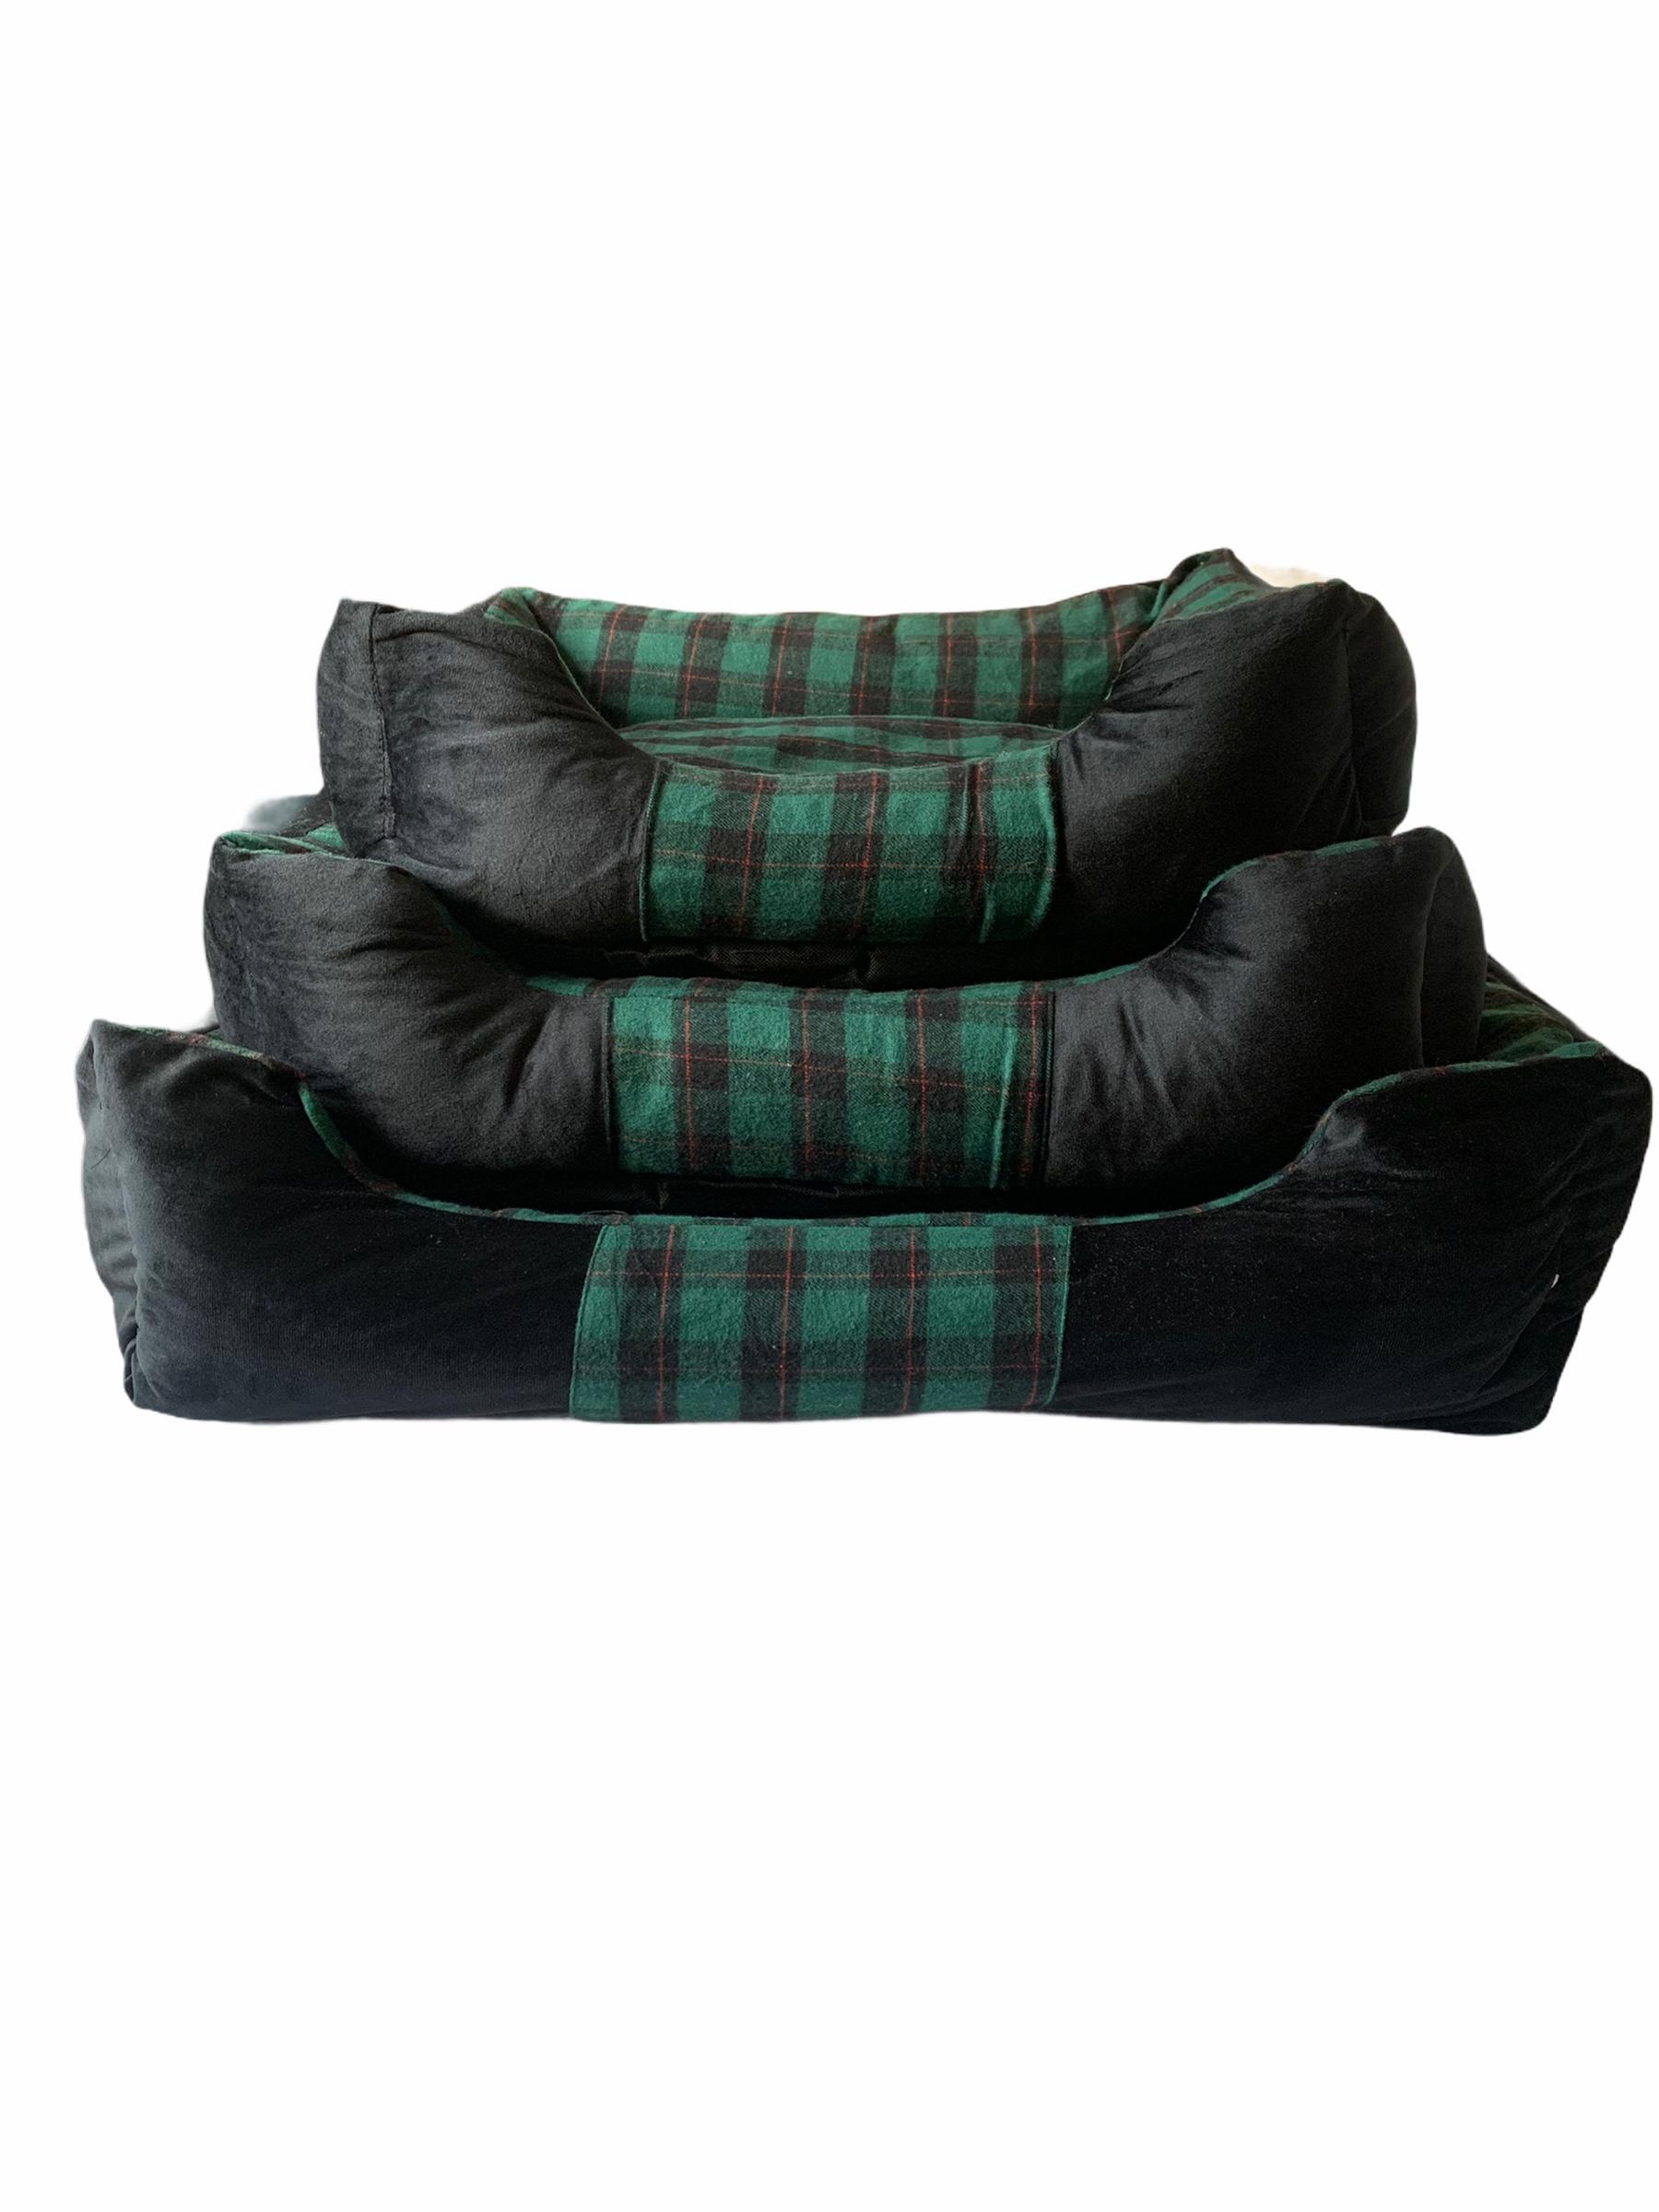 Black tartan dog beds